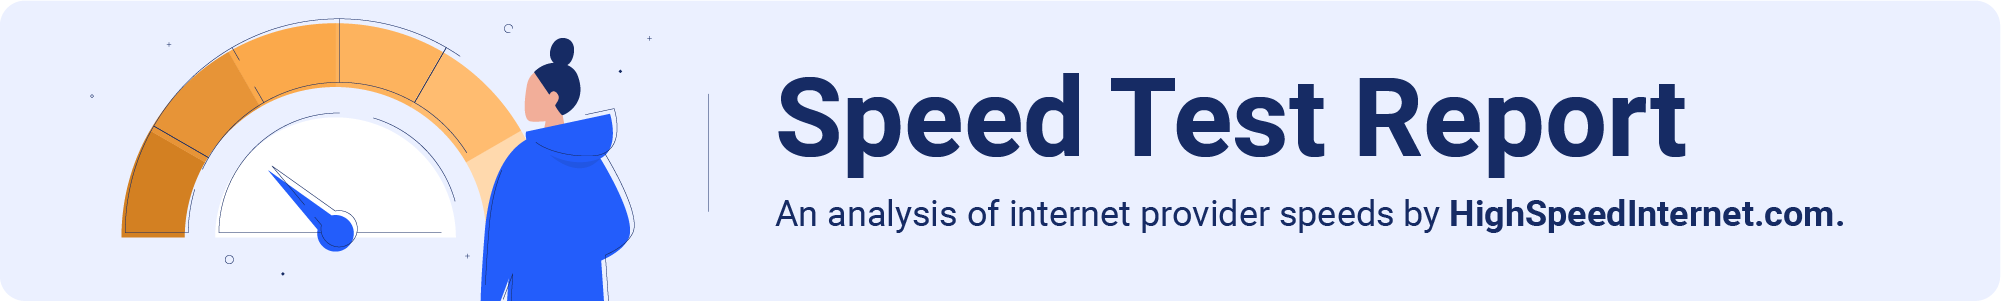 speed test report banner